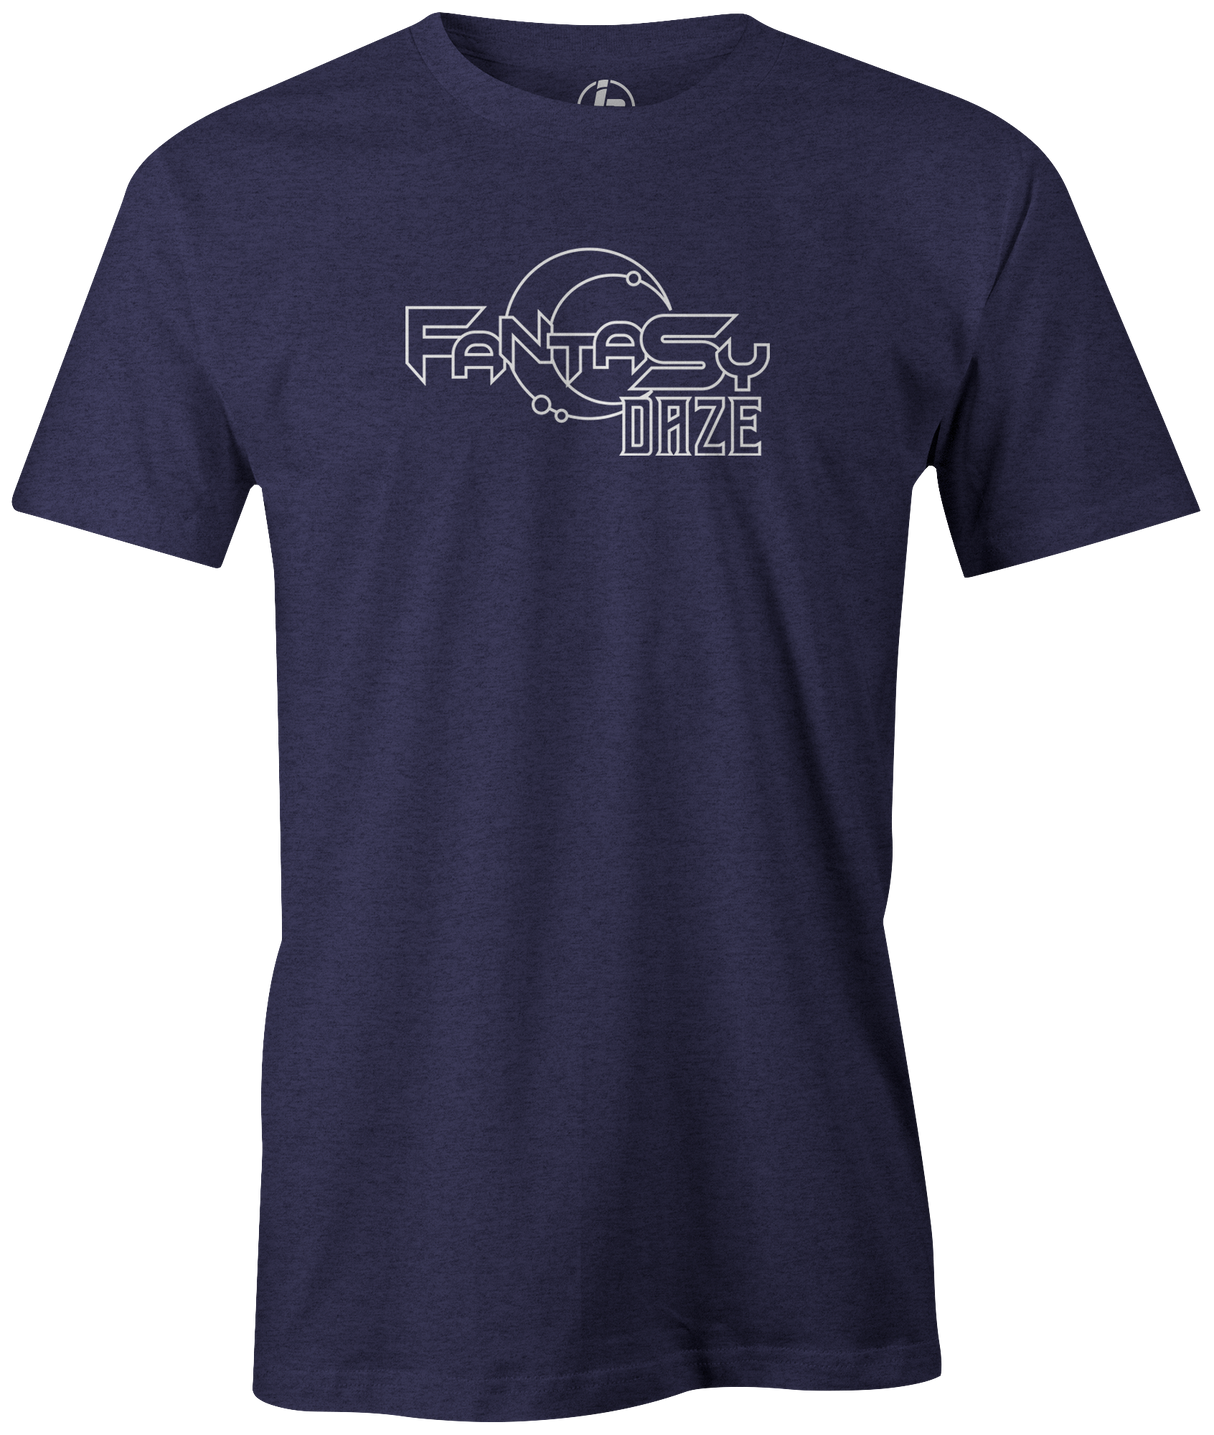 Fantasy Daze Swag Bowling Classic Logo T-shirt. This shirt is perfect for bowling practice, leagues or weekend tournaments. Men's T-Shirt, bowling ball, tee, tee shirt, tee-shirt, t shirt, t-shirt, tees, league, tournament shirt, PBA, PWBA, USBC.